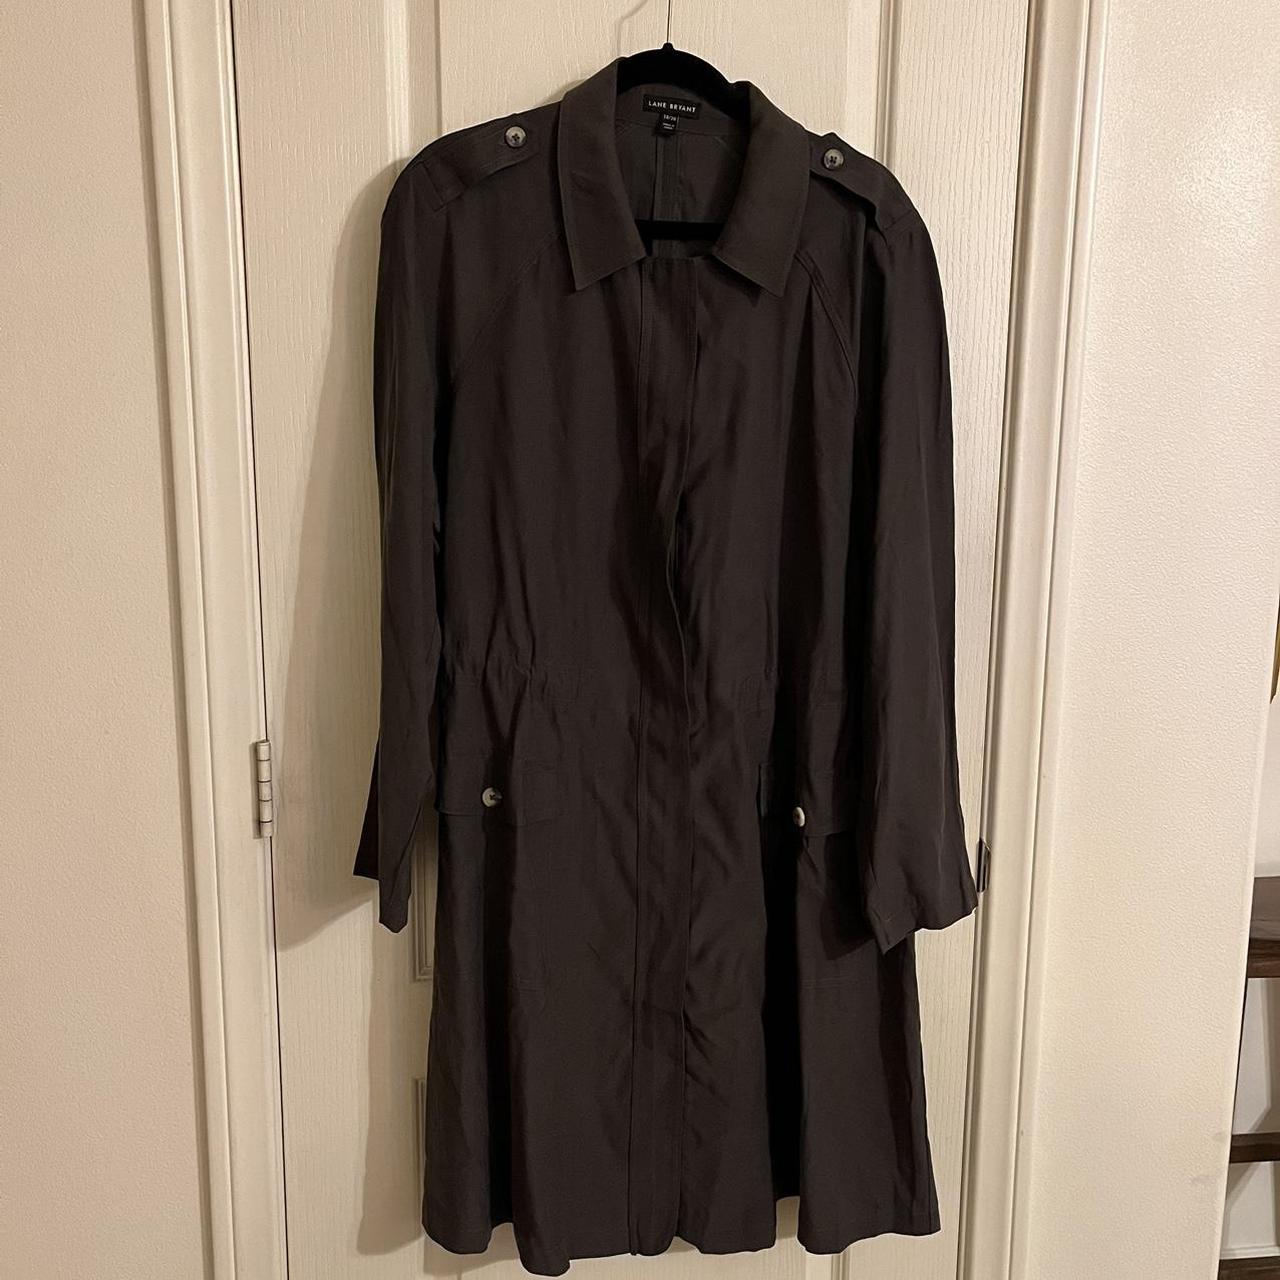 NWOT Lane Bryant trench coat (size 18/20) 🤎 FREE... - Depop